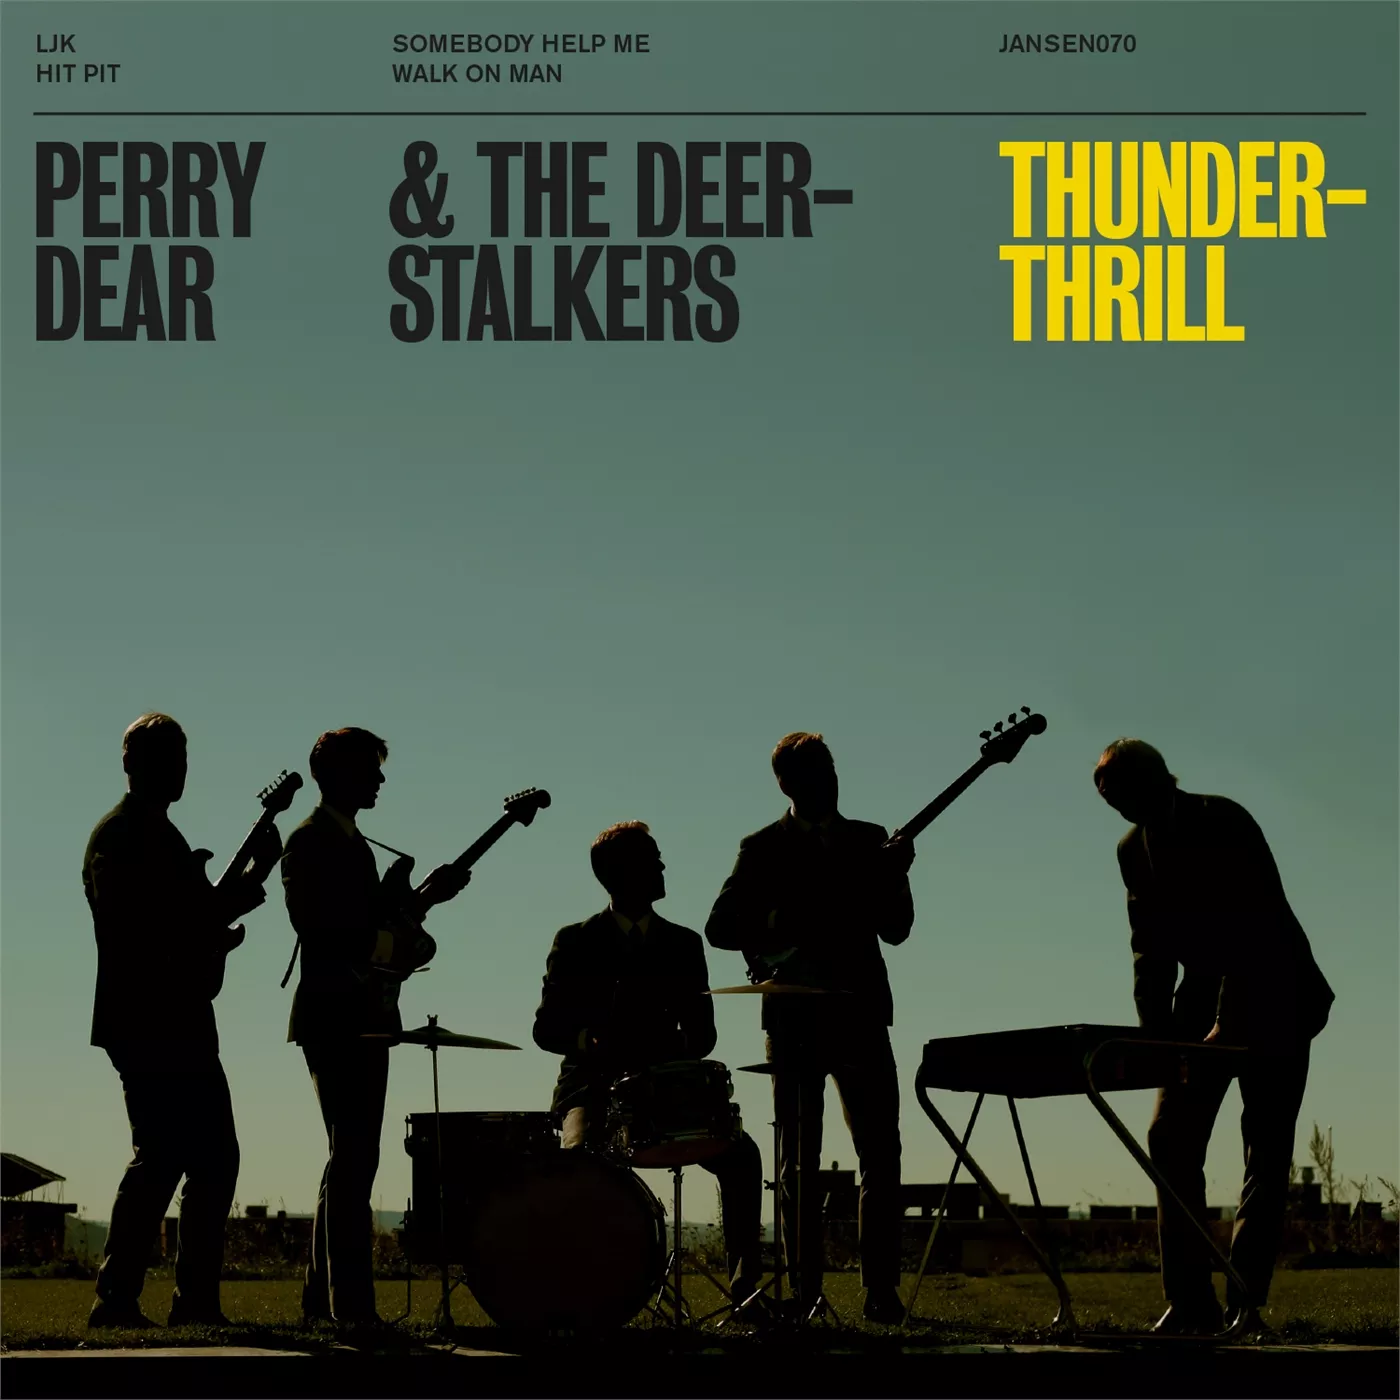 Perry Dear & The Deerstalkers: Thunderthrill